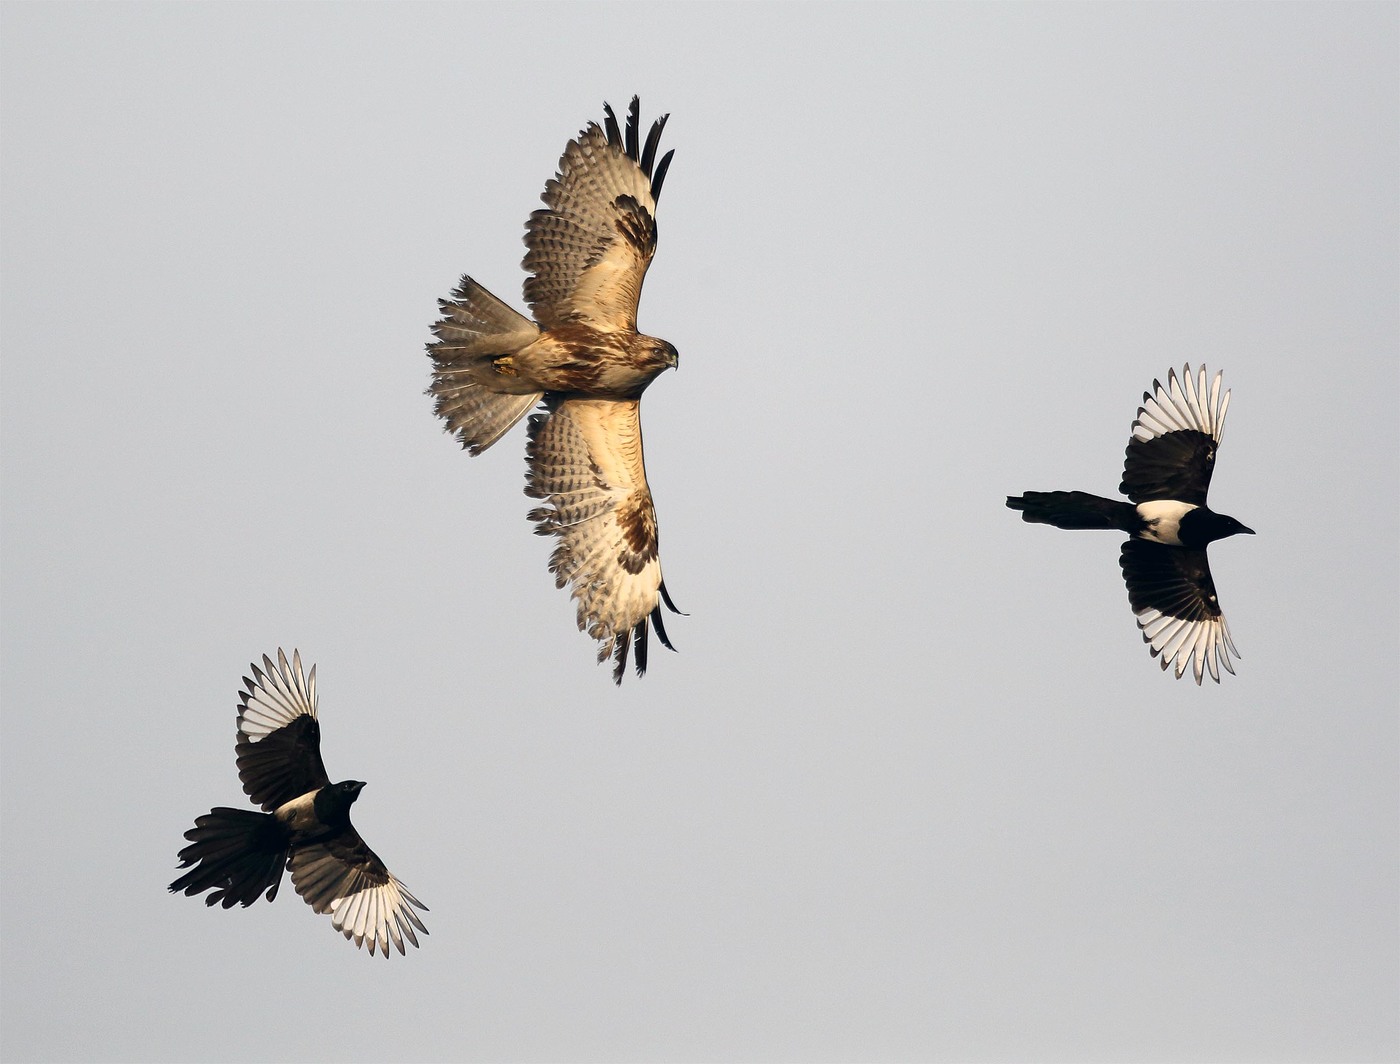 Magpies chase the buzzard, Golden Horn Bay, Vladivostok